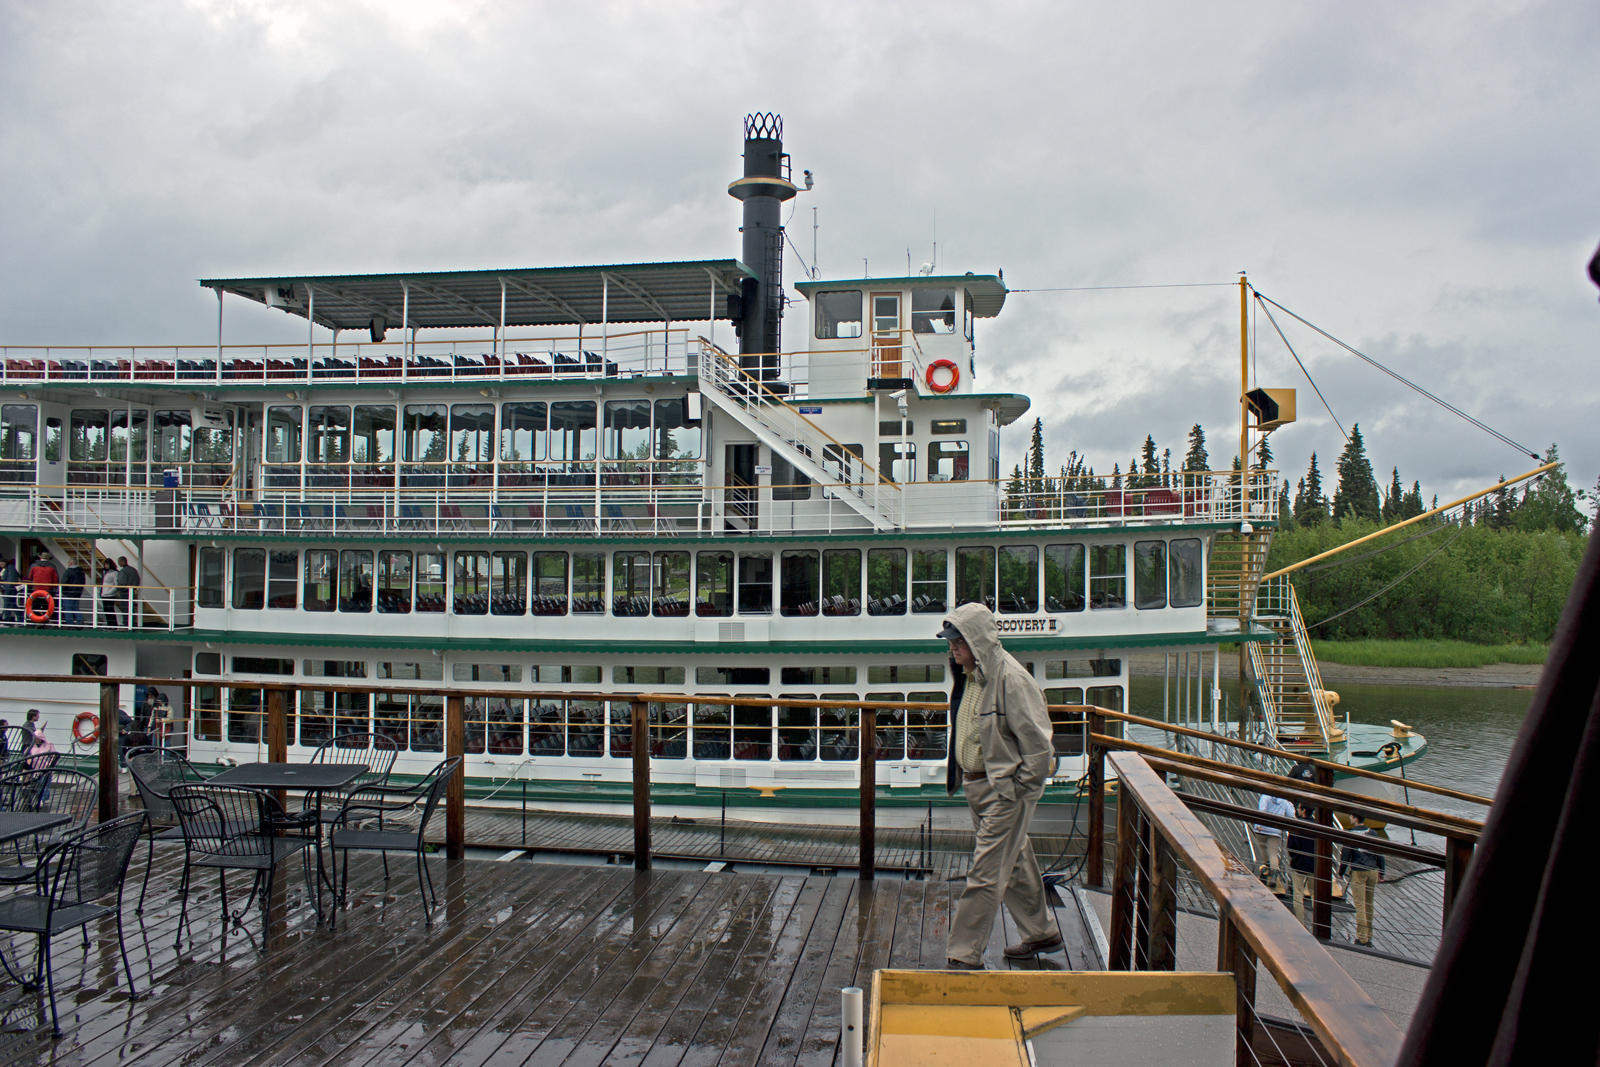 riverboat discovery tour fairbanks alaska